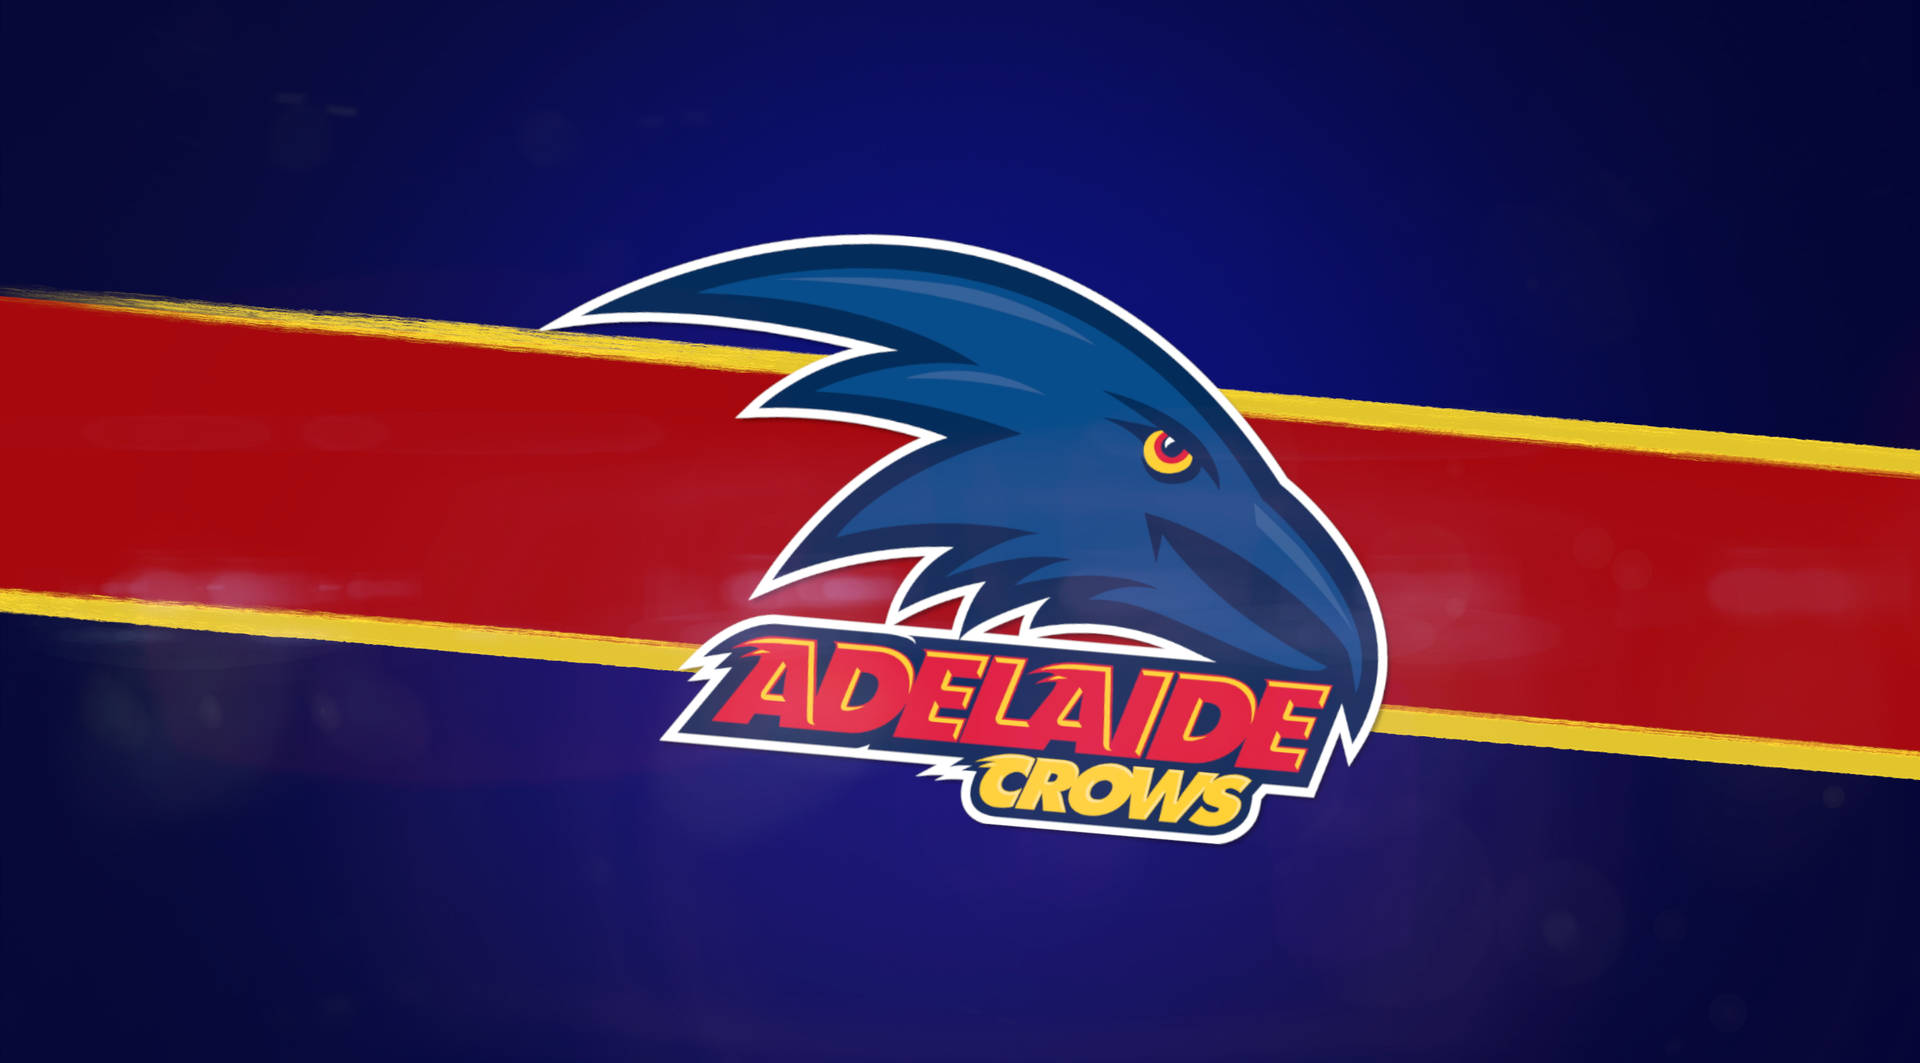 Afl Adelaide Crows Background